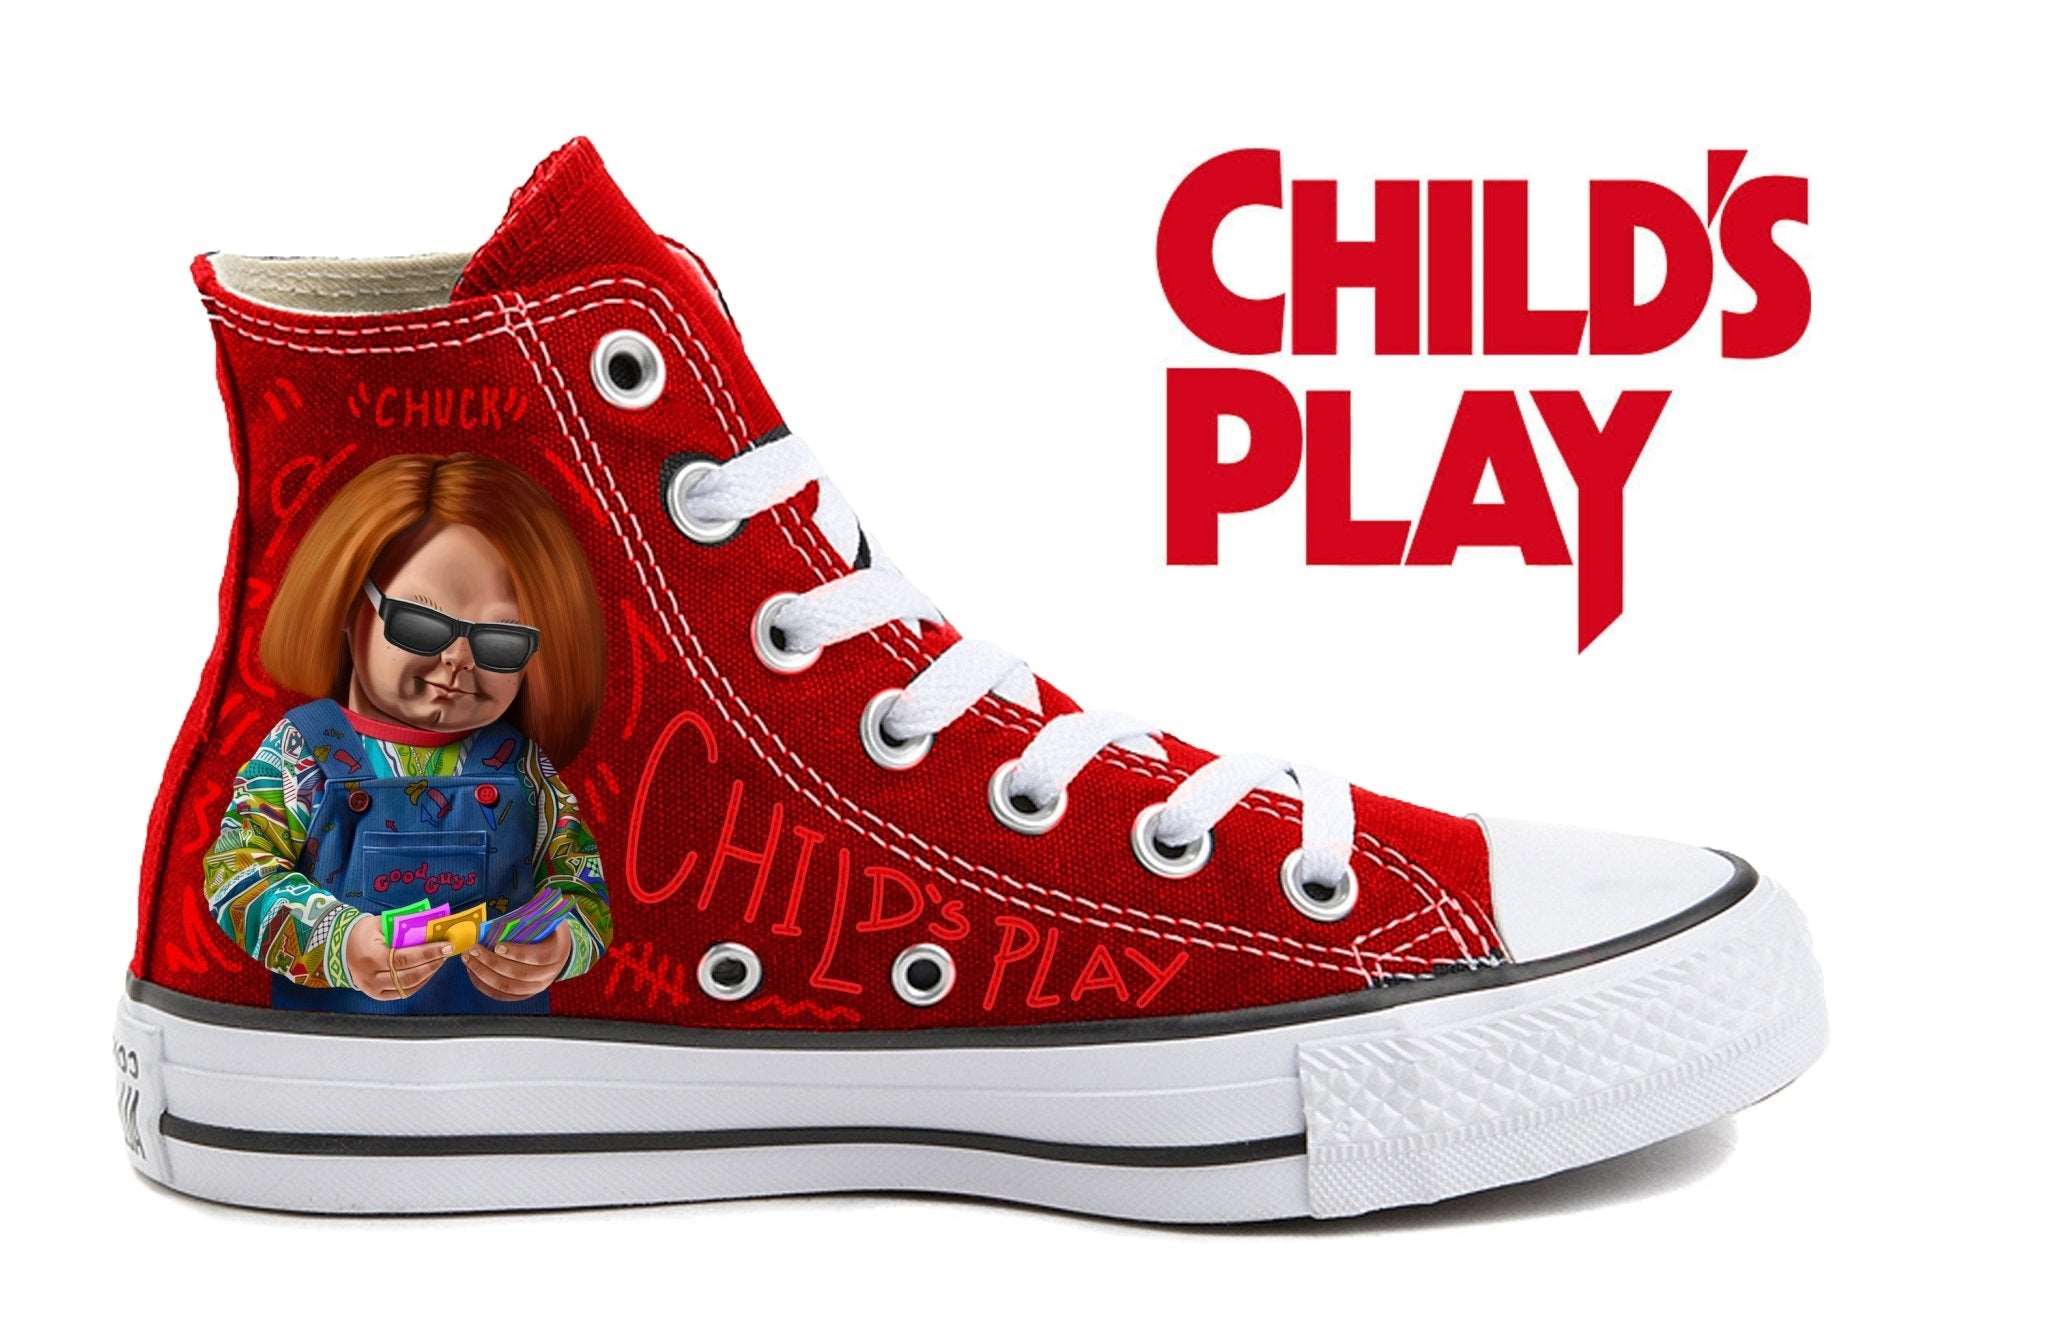 Chucky | Child's Play | Converse - Androo's Art